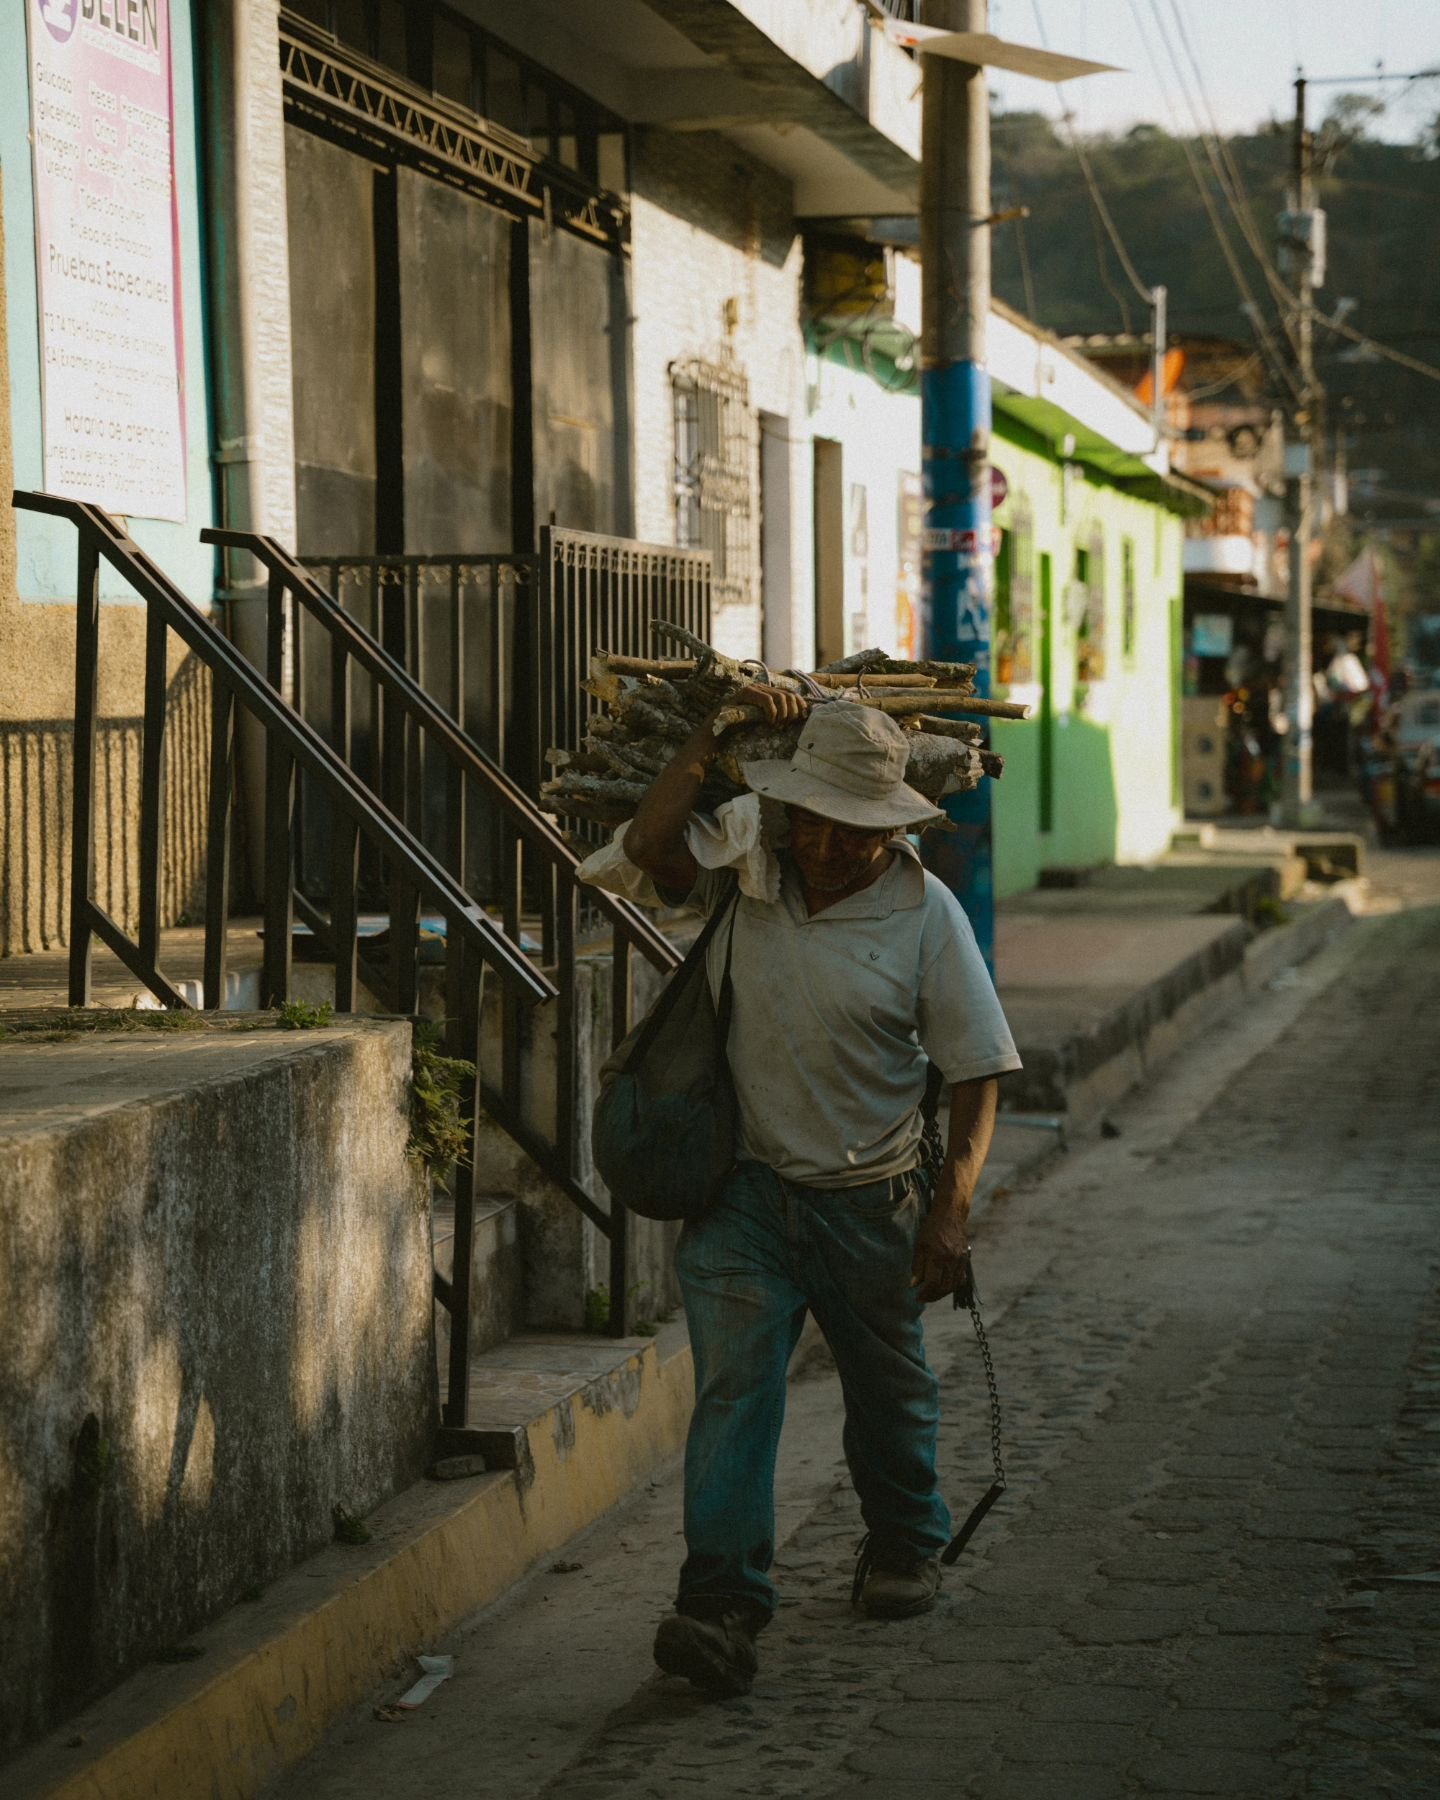 Ataco, El Salvador 🤍

&bull;
&bull;
&bull;
&bull;
&bull;

#atacoelsalvador #oldcityphotography #turismoelsalvador #pueblito #salvadorean #community #lifestyleshots #peoplephotography #portrait #visitelsalvador #exploreelsalvador #sivar #elsalvador🇸